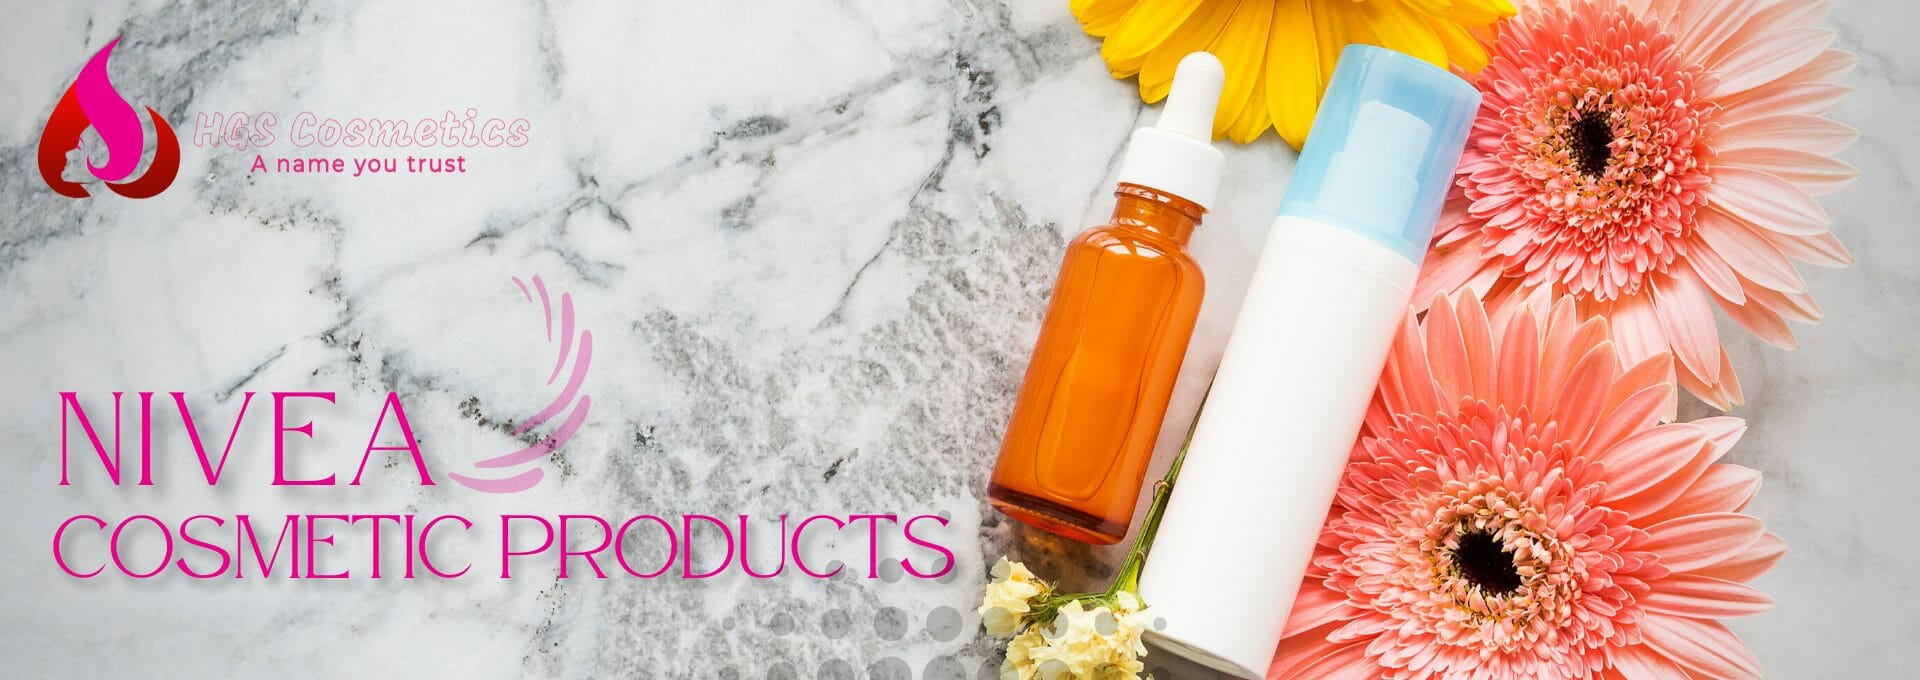 Buy Original Nivea Products Online in Pakistan @ HGS Cosmetics